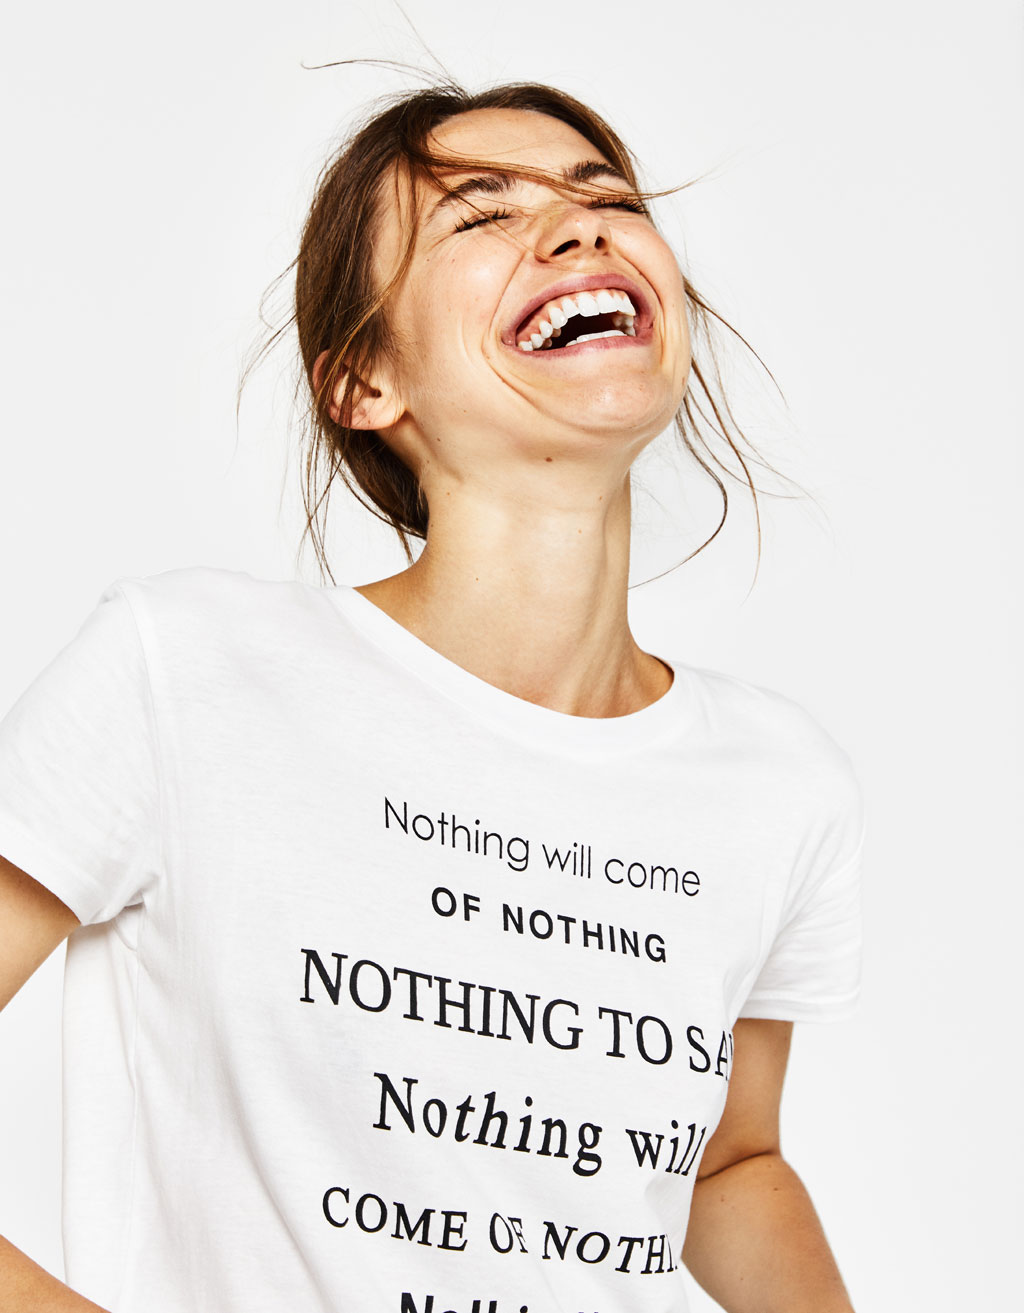 01-t-shirt-a-message-fun-folkr-nothing-bershka